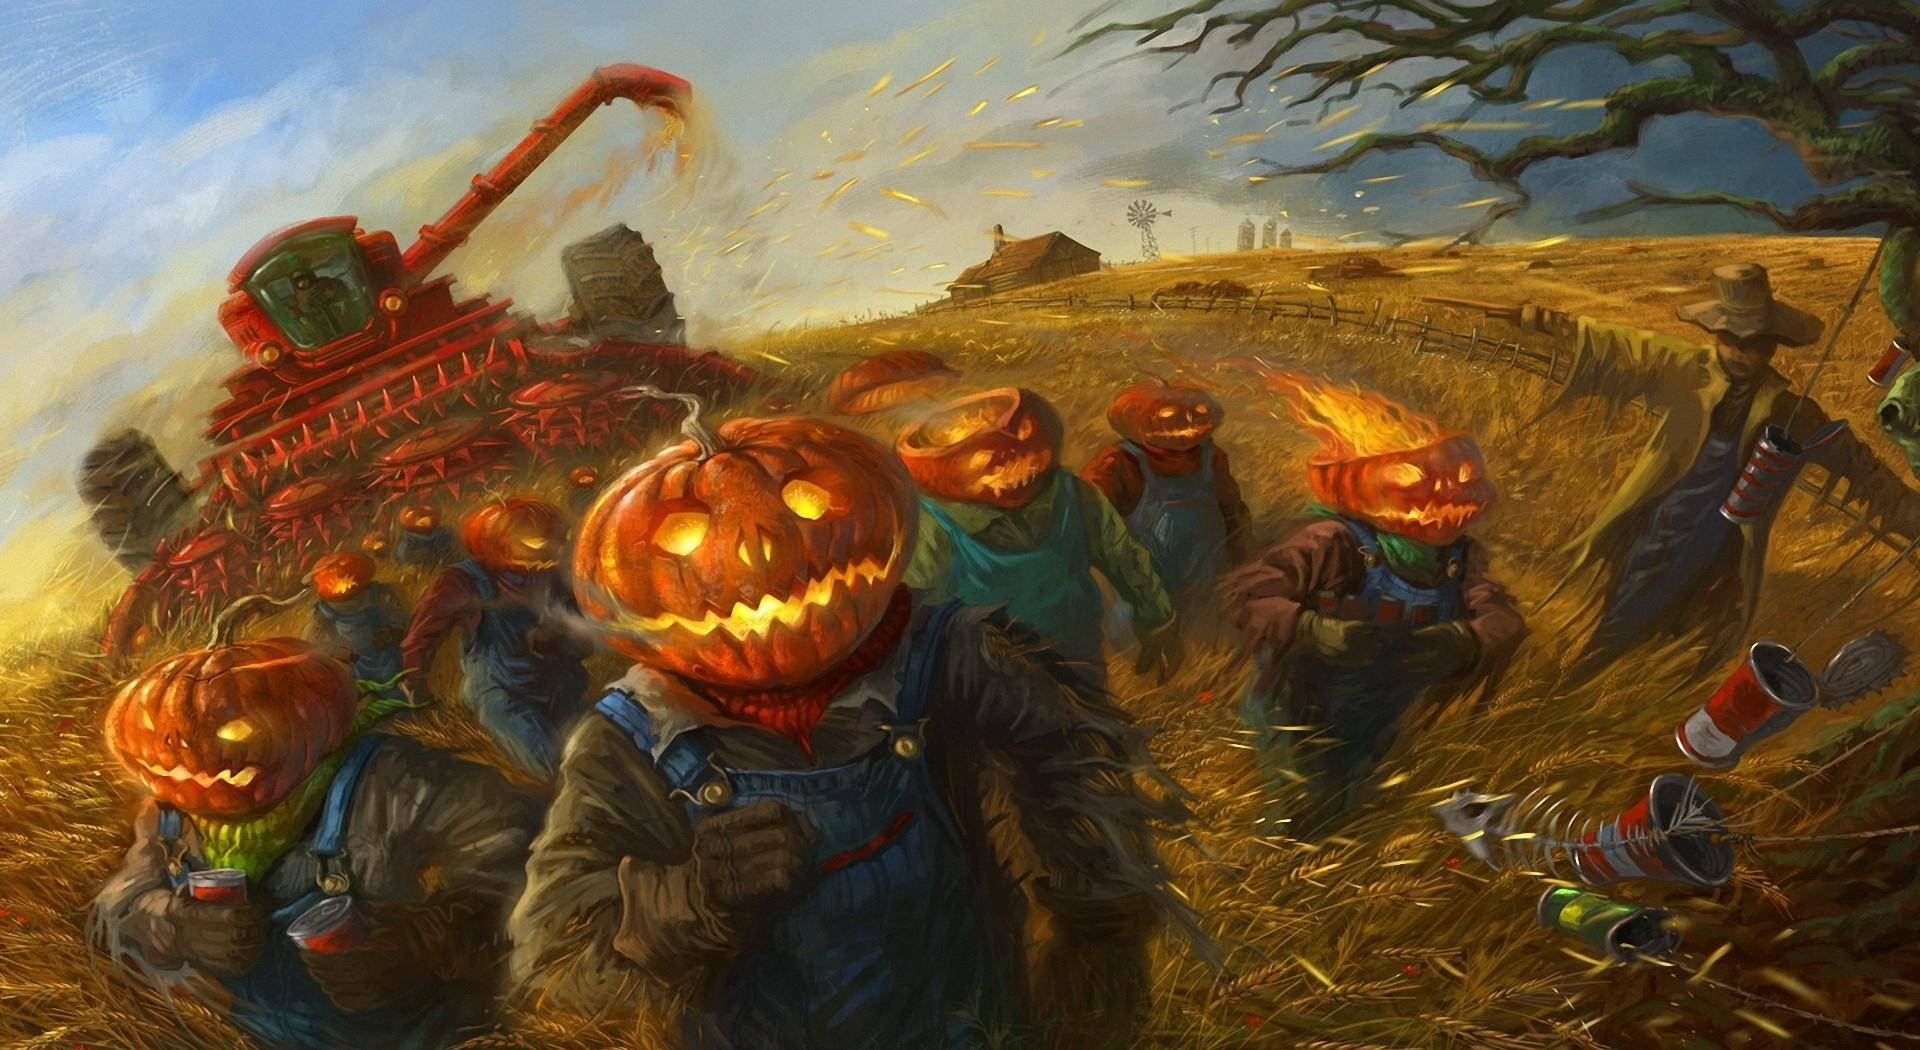 Pumpkin halloween painting with pumpkin heads running on a field with monster machine, ghost.